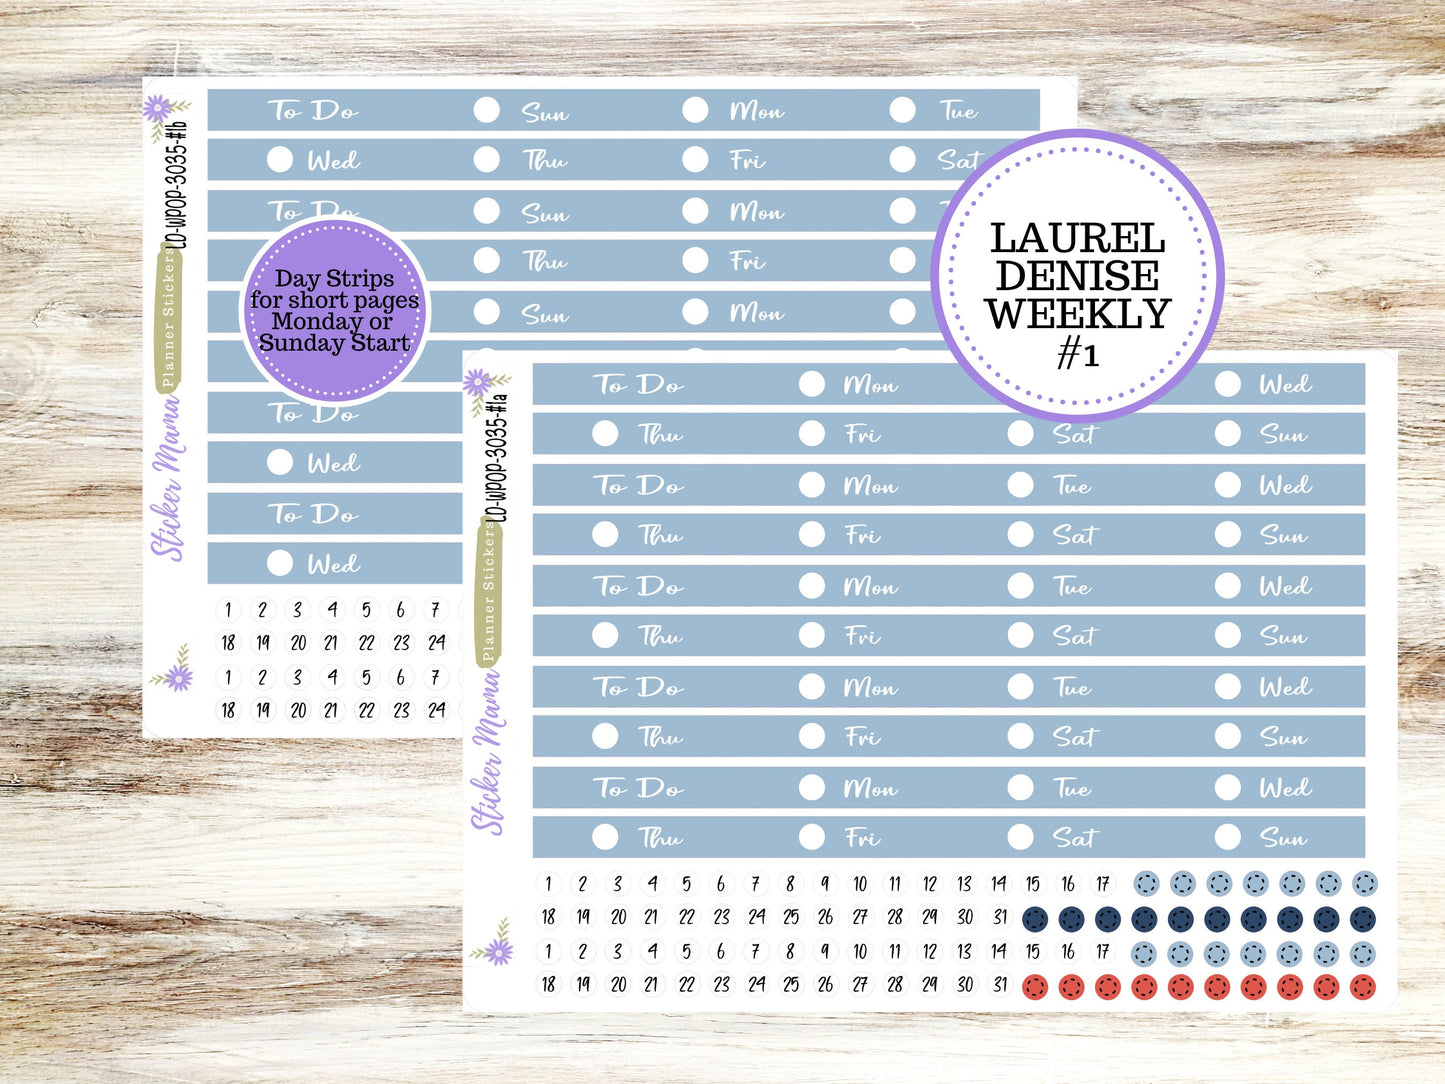 LAUREL DENISE PORTRAIT July Planner Kit #3035 || American Dream || Laurel Denise Kit || Laurel Denise Stickers ||  || July ld